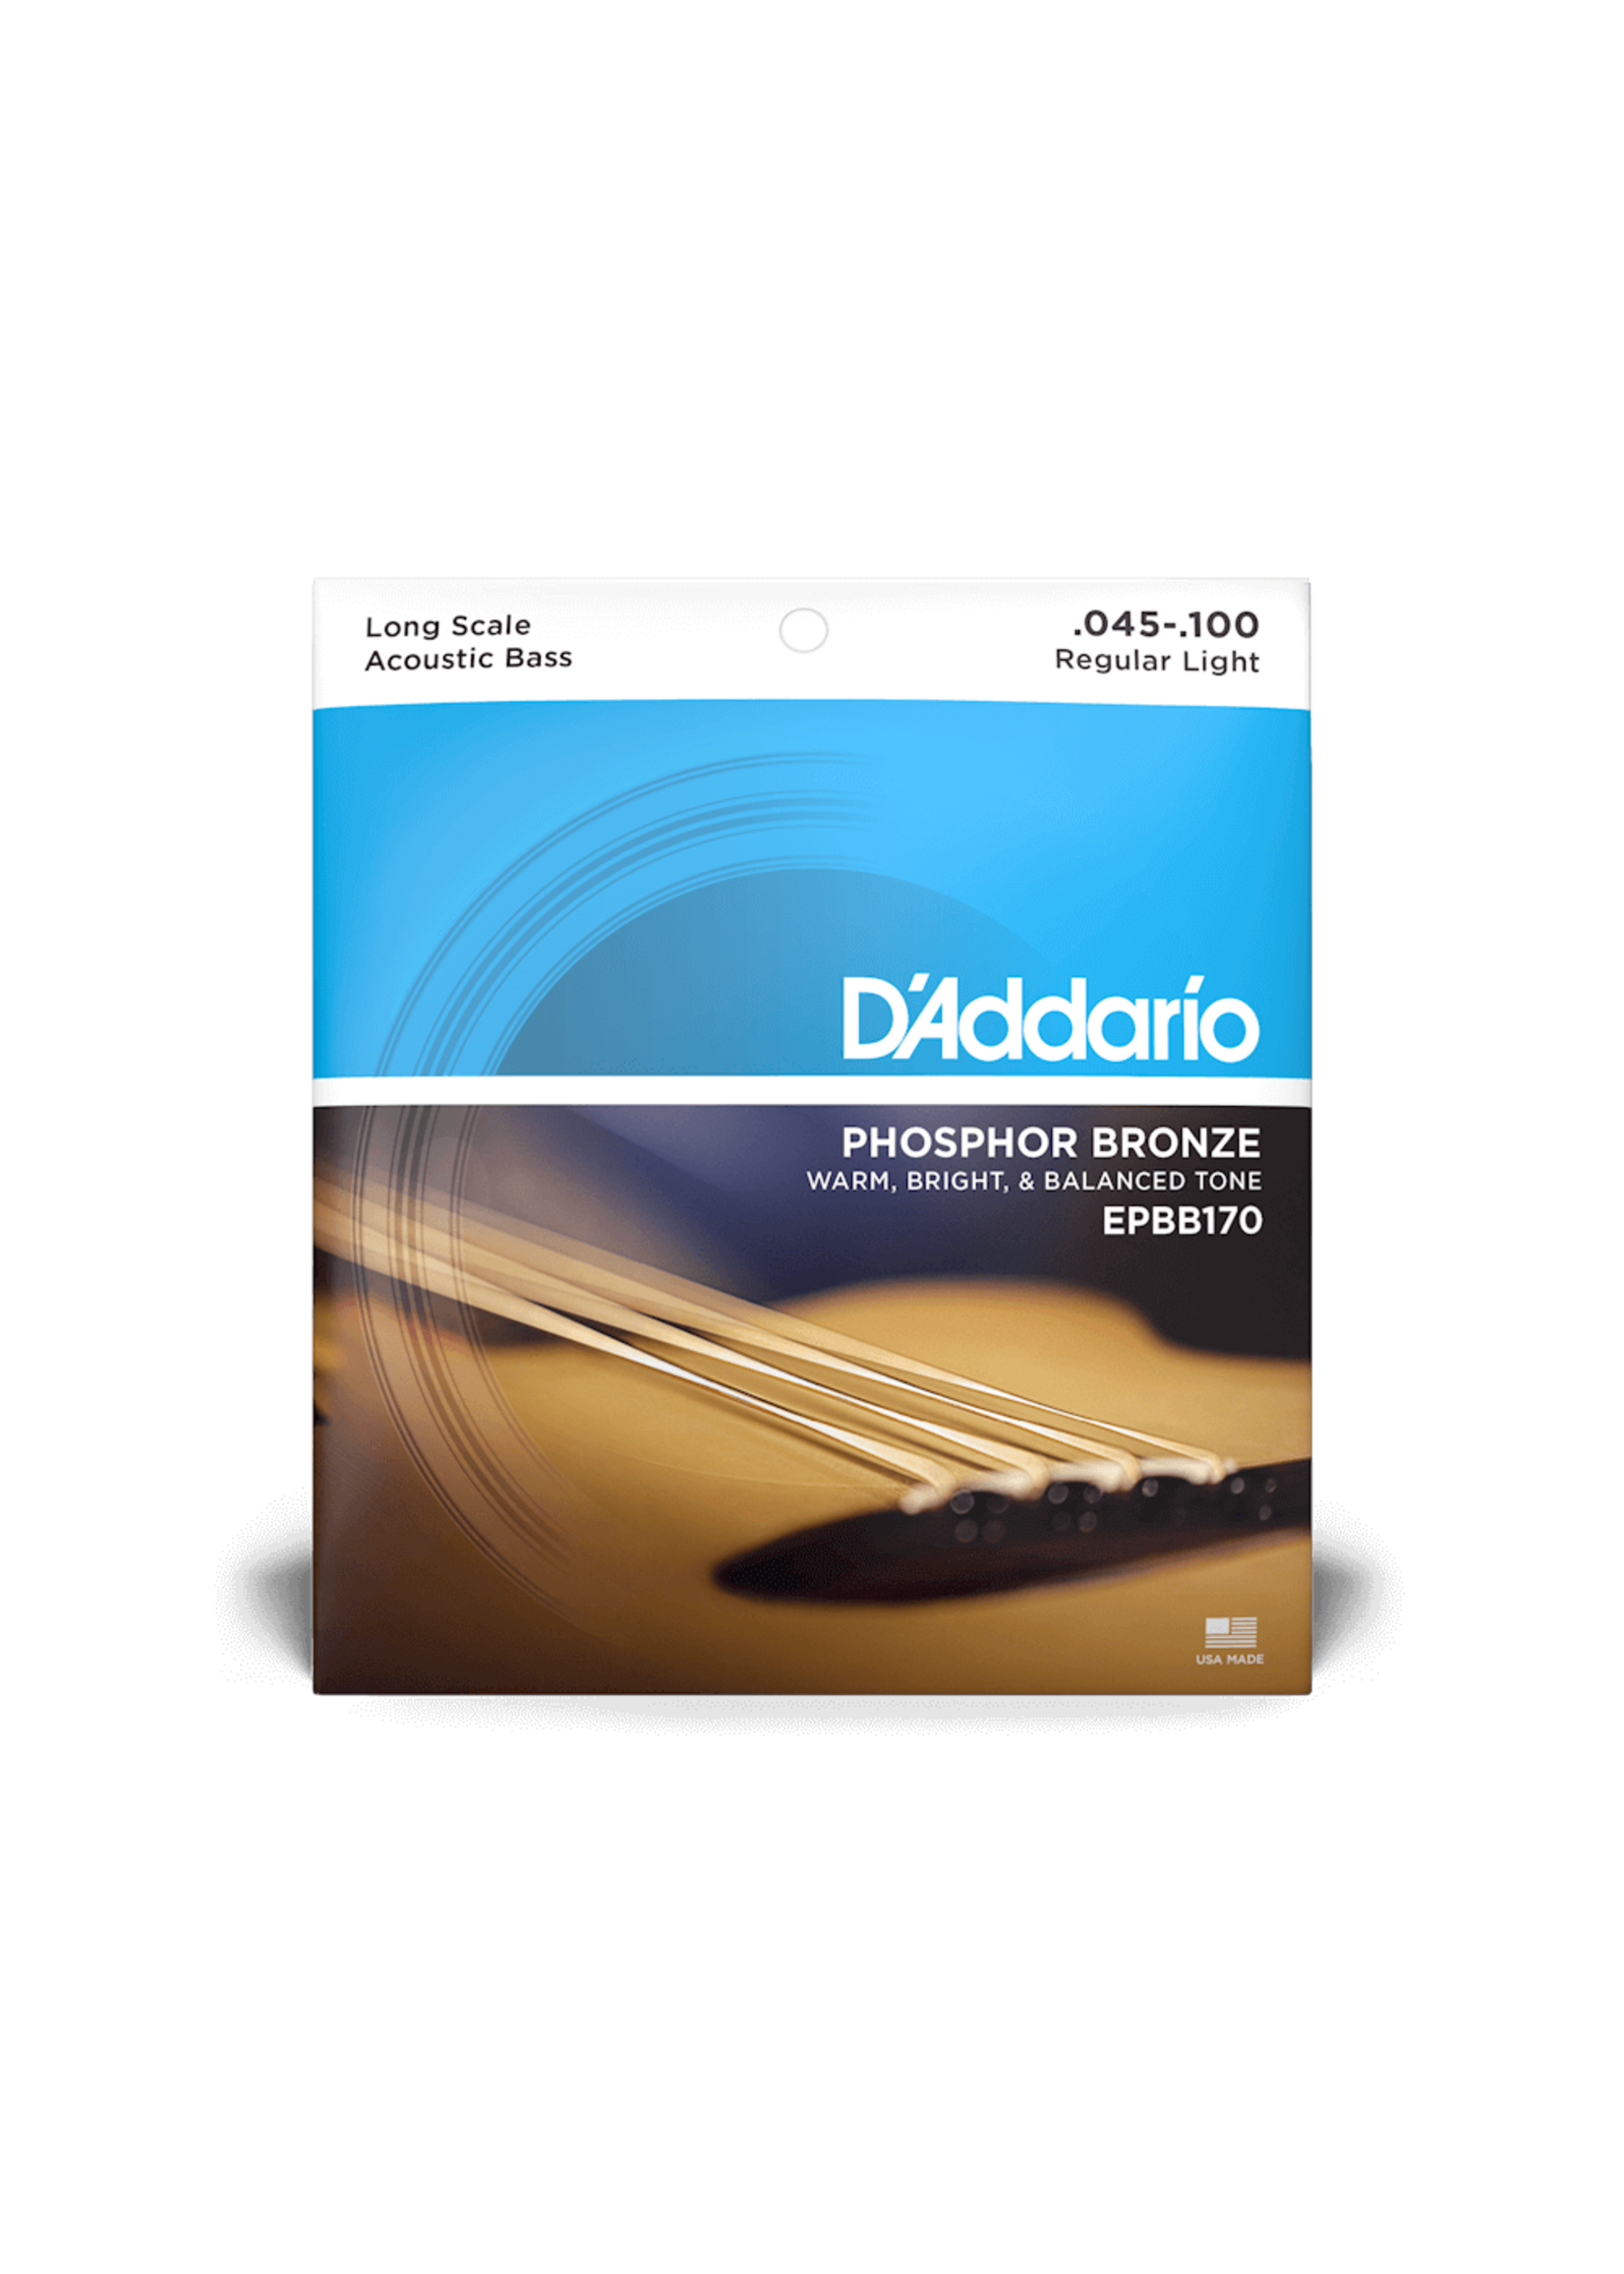 D'Addario D'Addario Acoustic Bass Strings Phosphor Bronze Regular Light